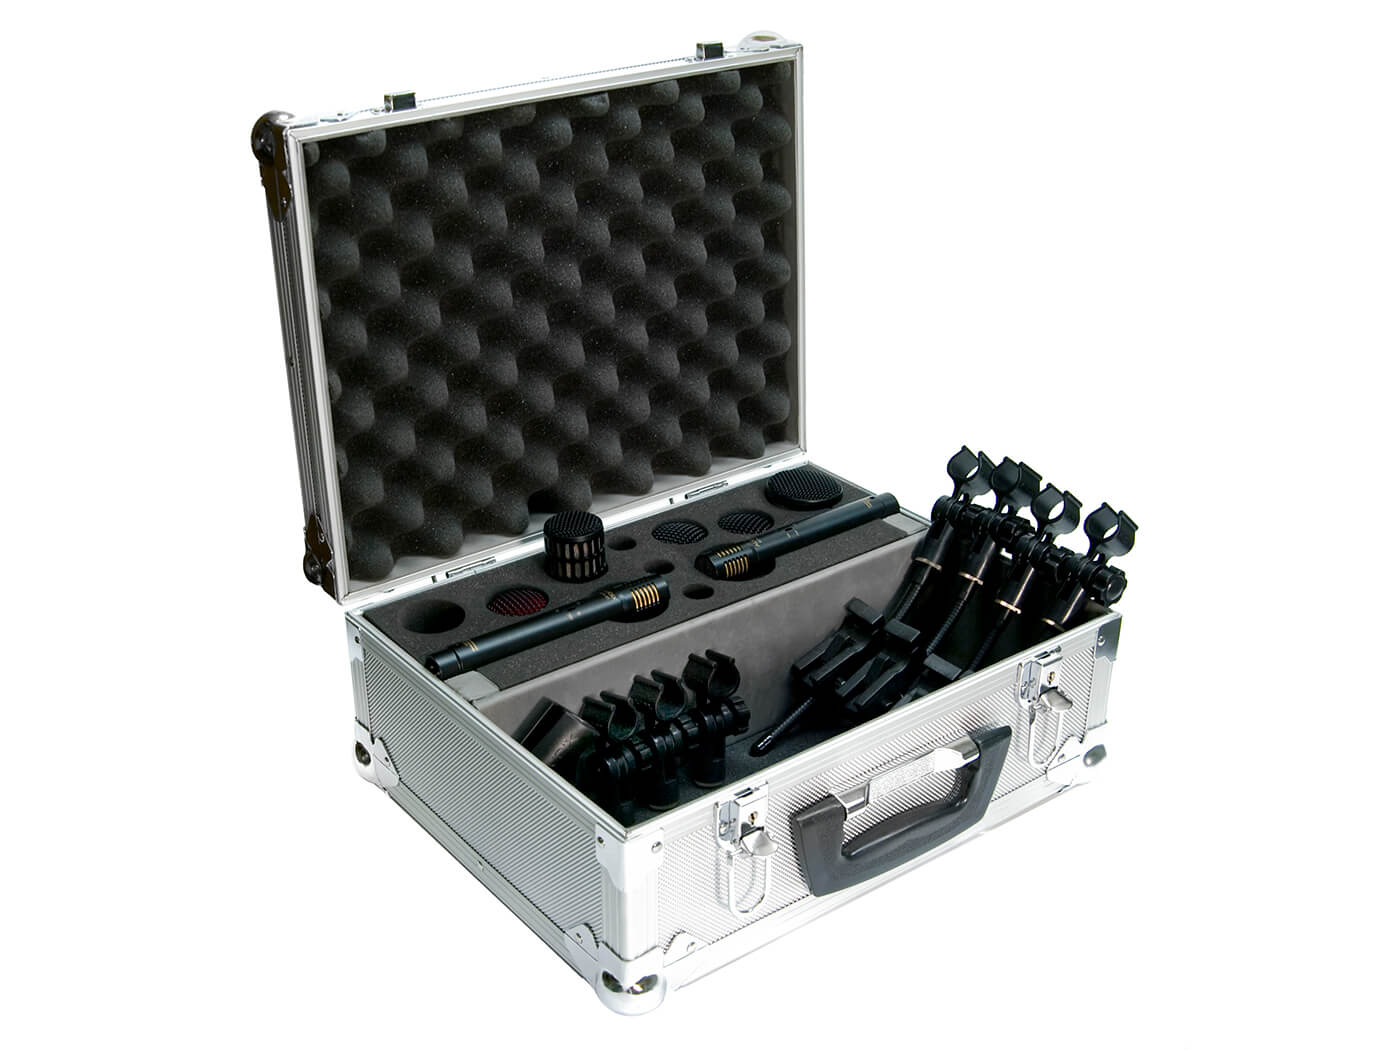 Audix DP7 Drum Microphone Pack